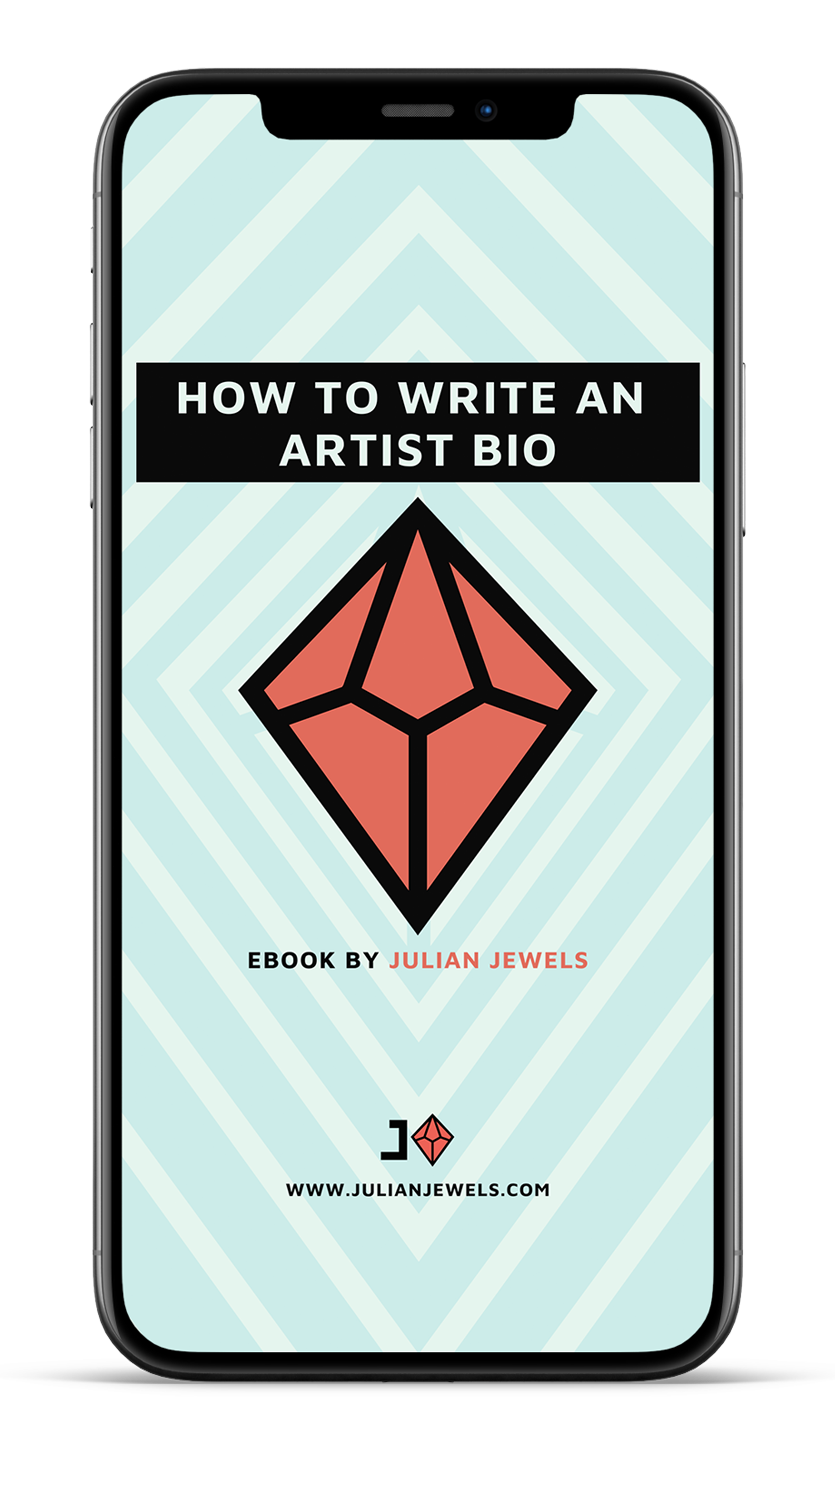 Julian Jewels - How To Write An Artist Bio